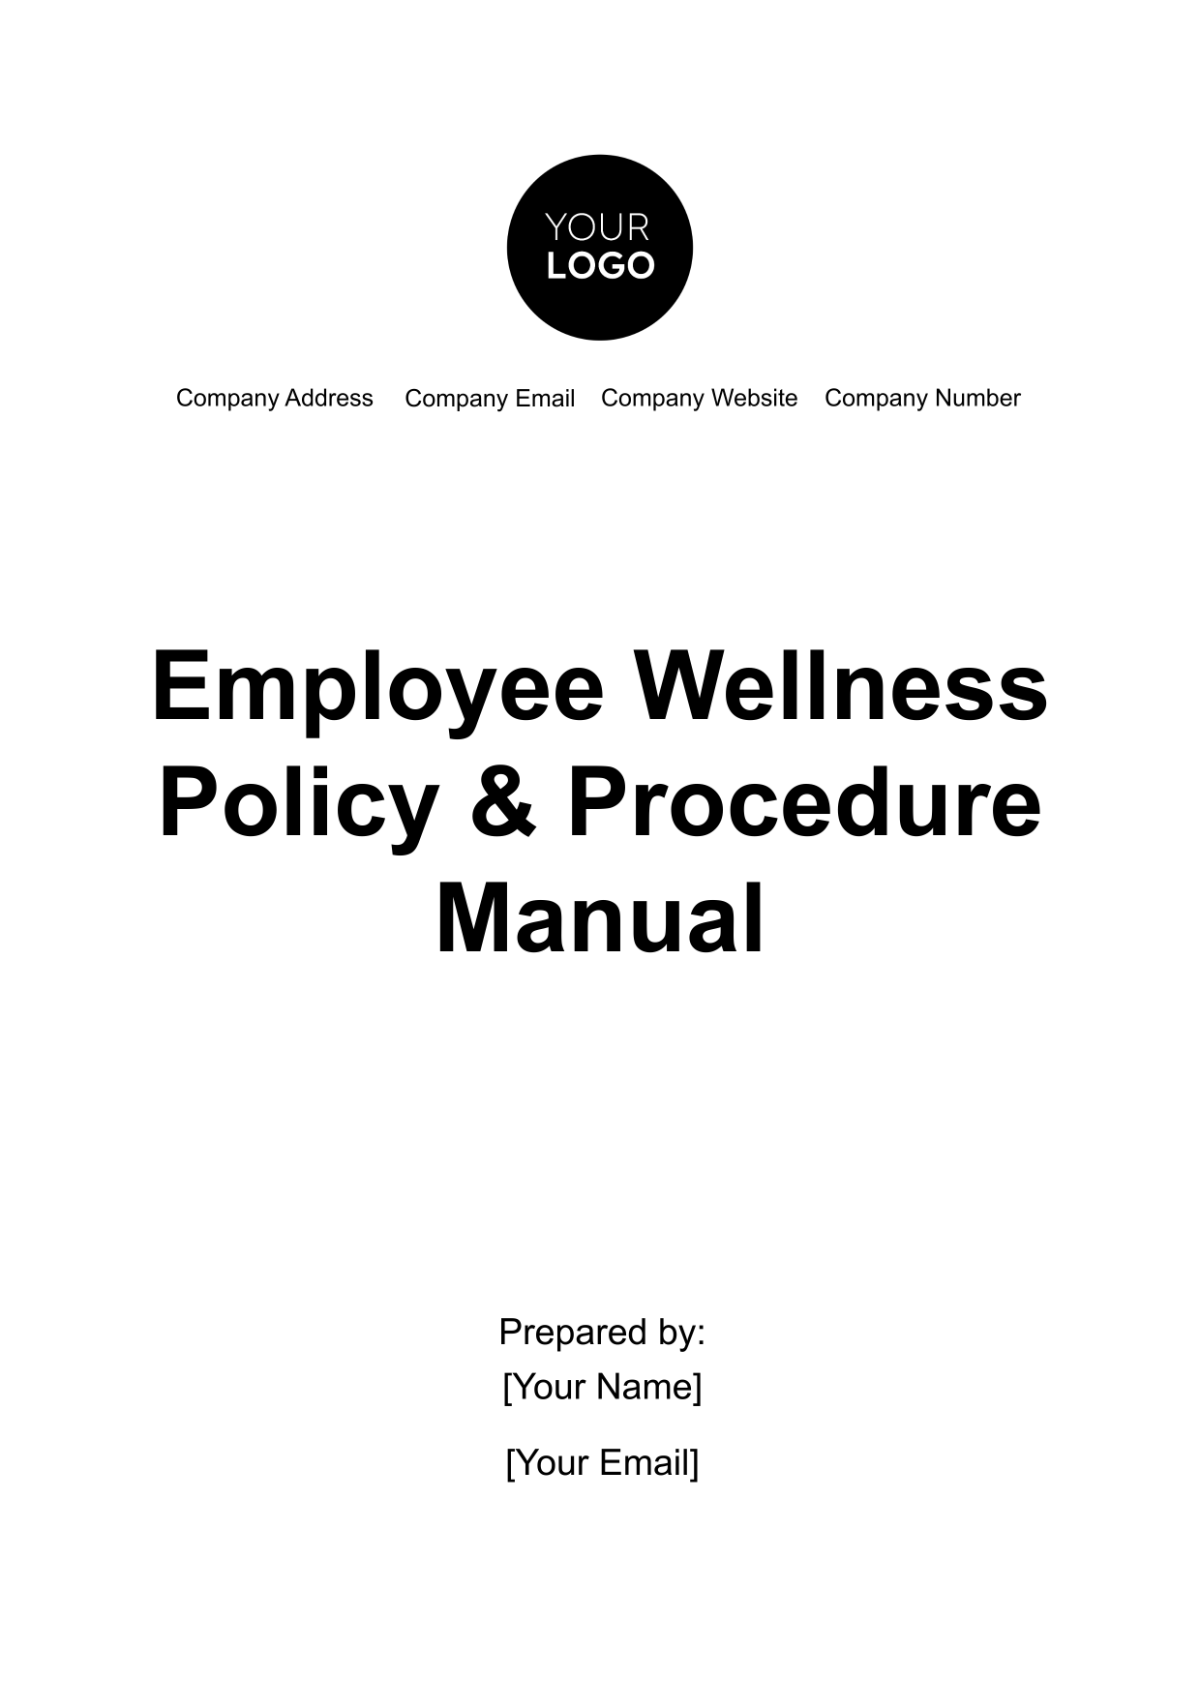 Free Employee Wellness Policy & Procedure Manual Template